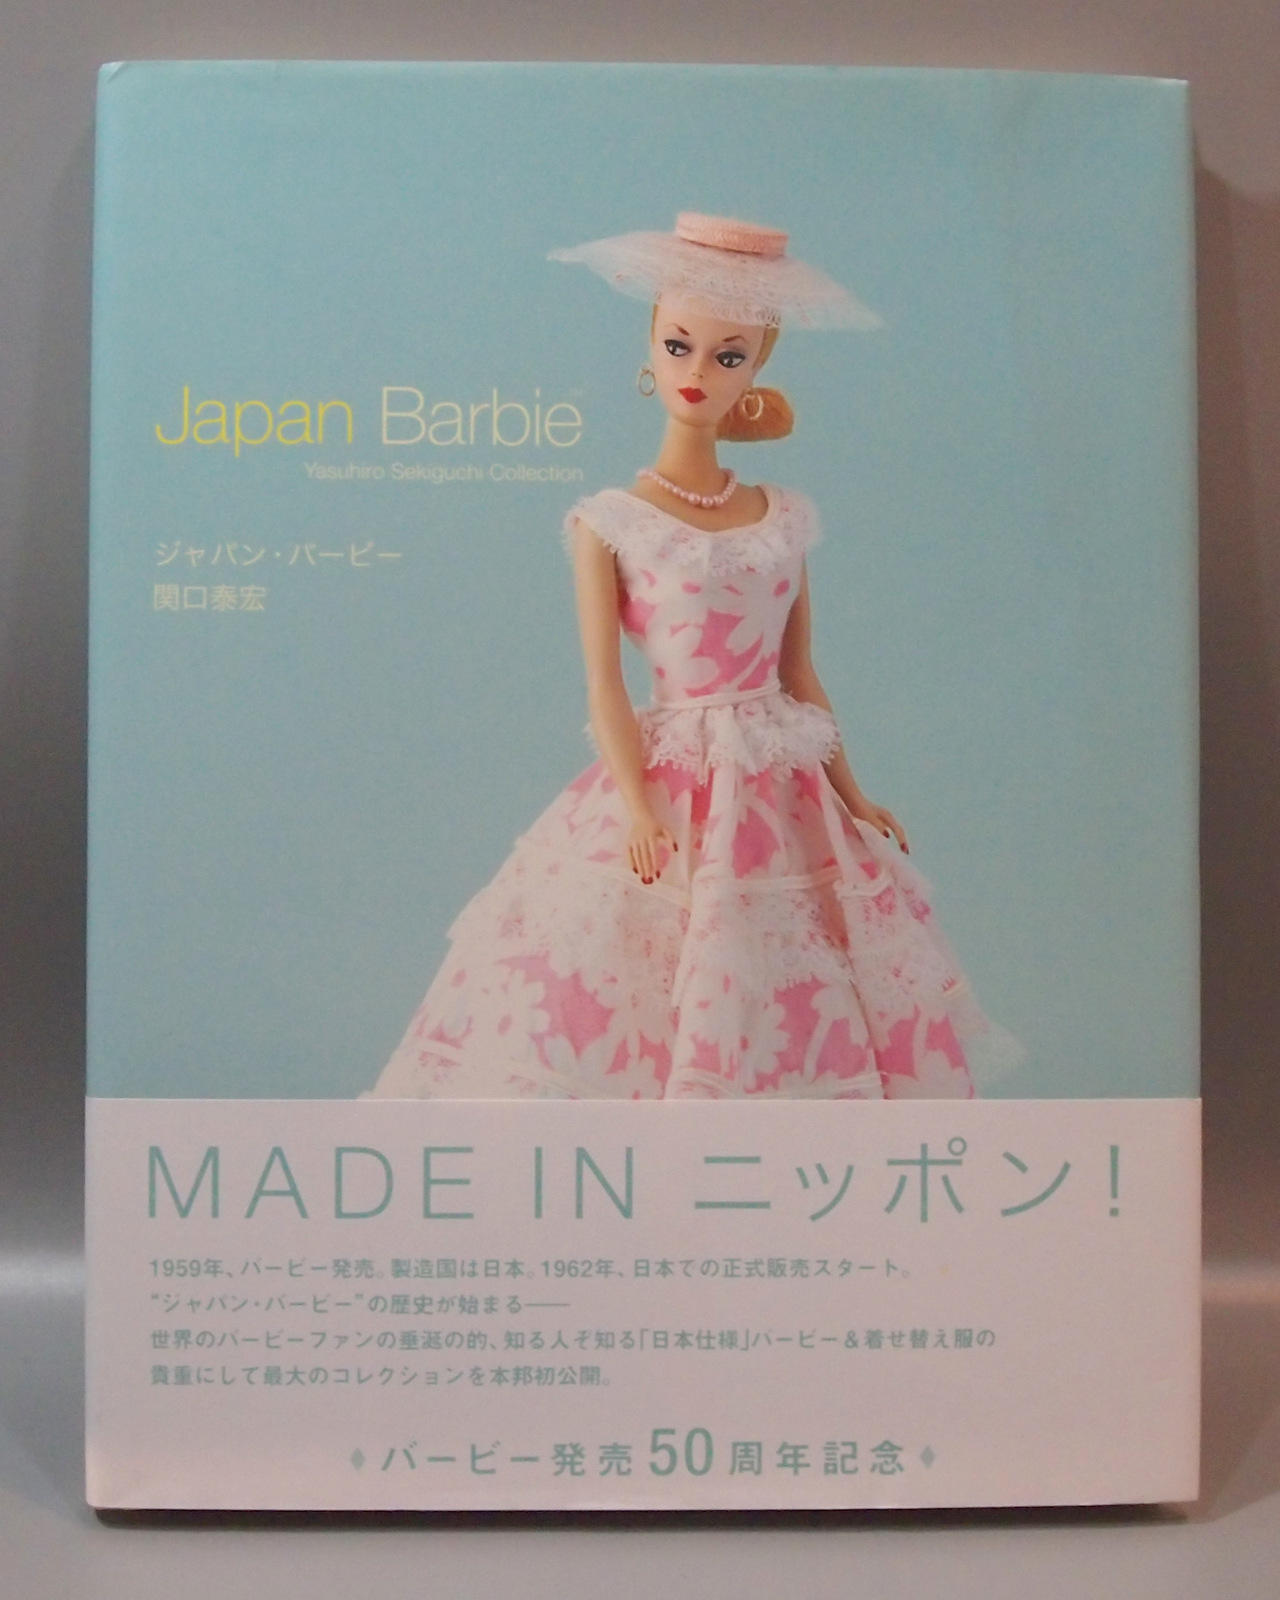 Japan Barbie ジャパン バービー book